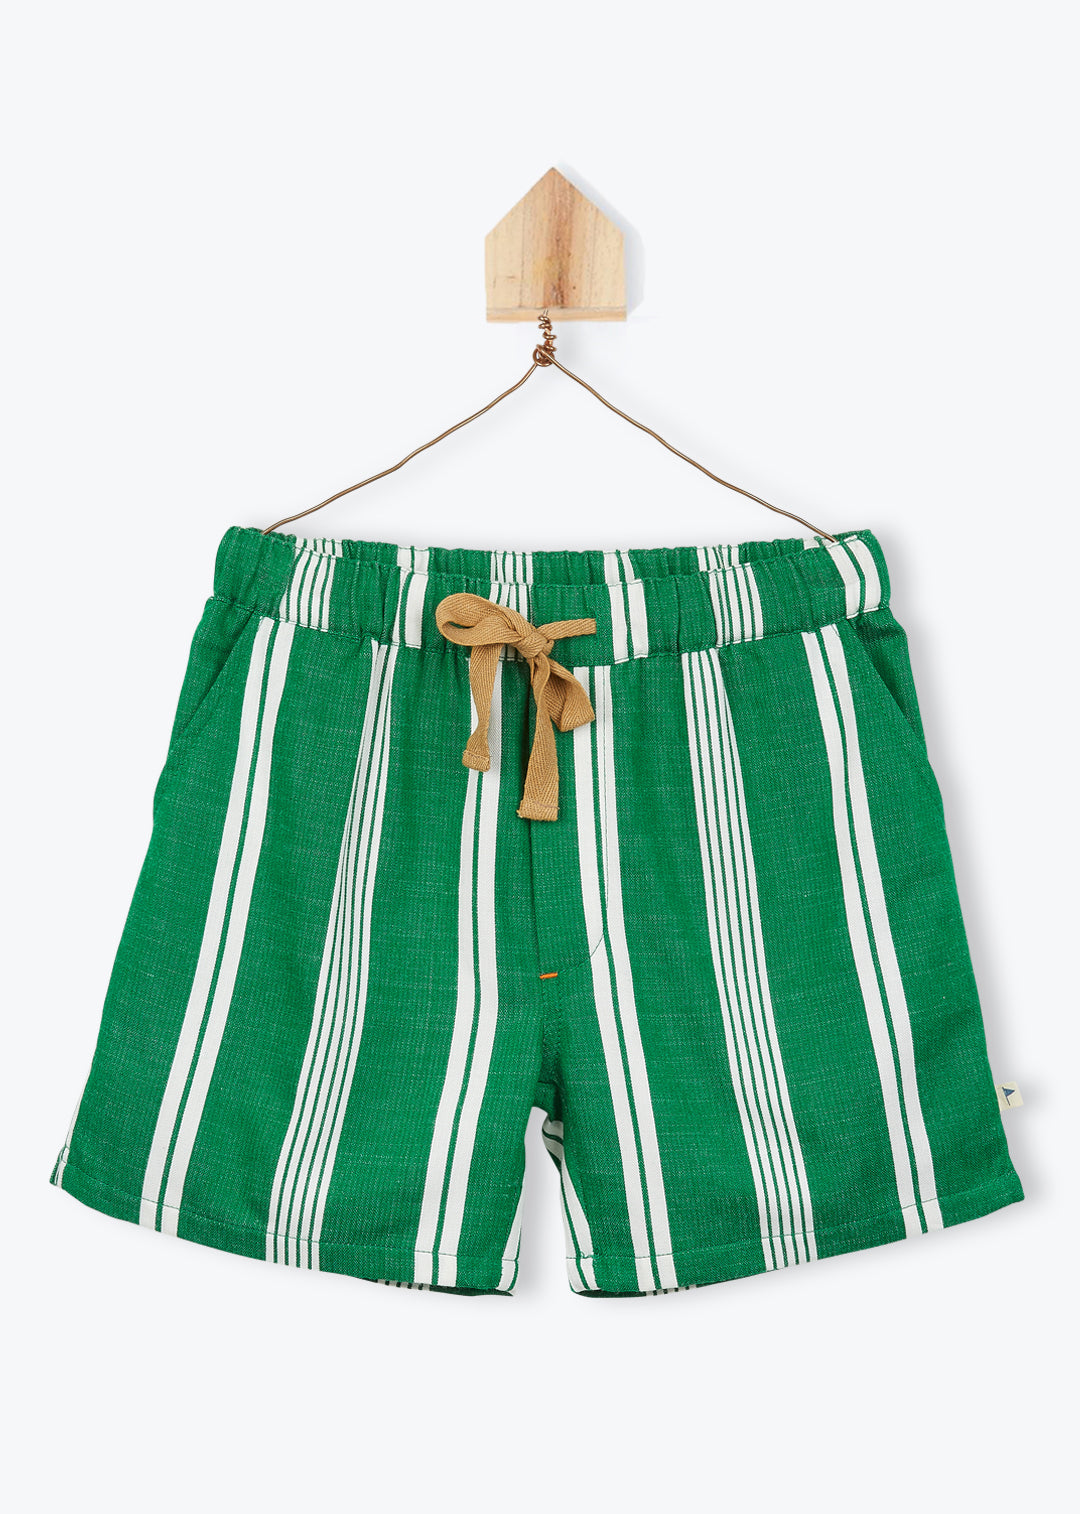 Shorts Boy Green Striped - قميص